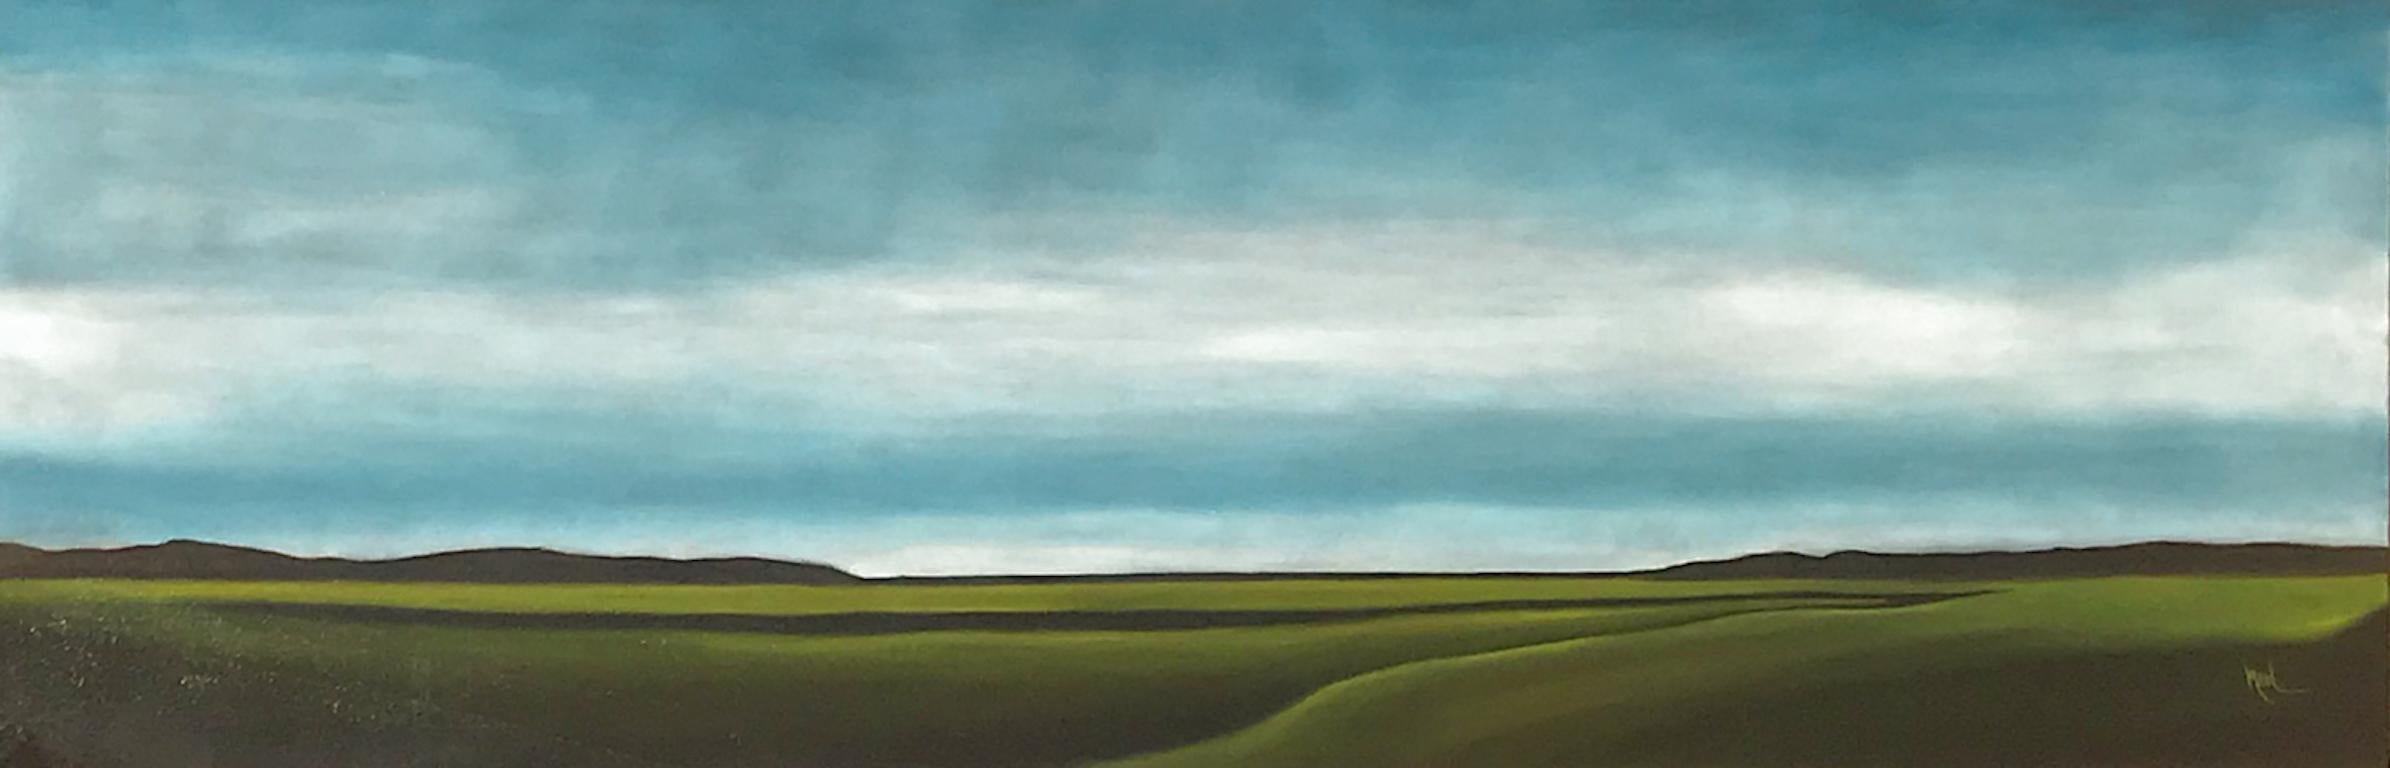 Mandy Main Landscape Painting - Expanse VIII, Oil Painting